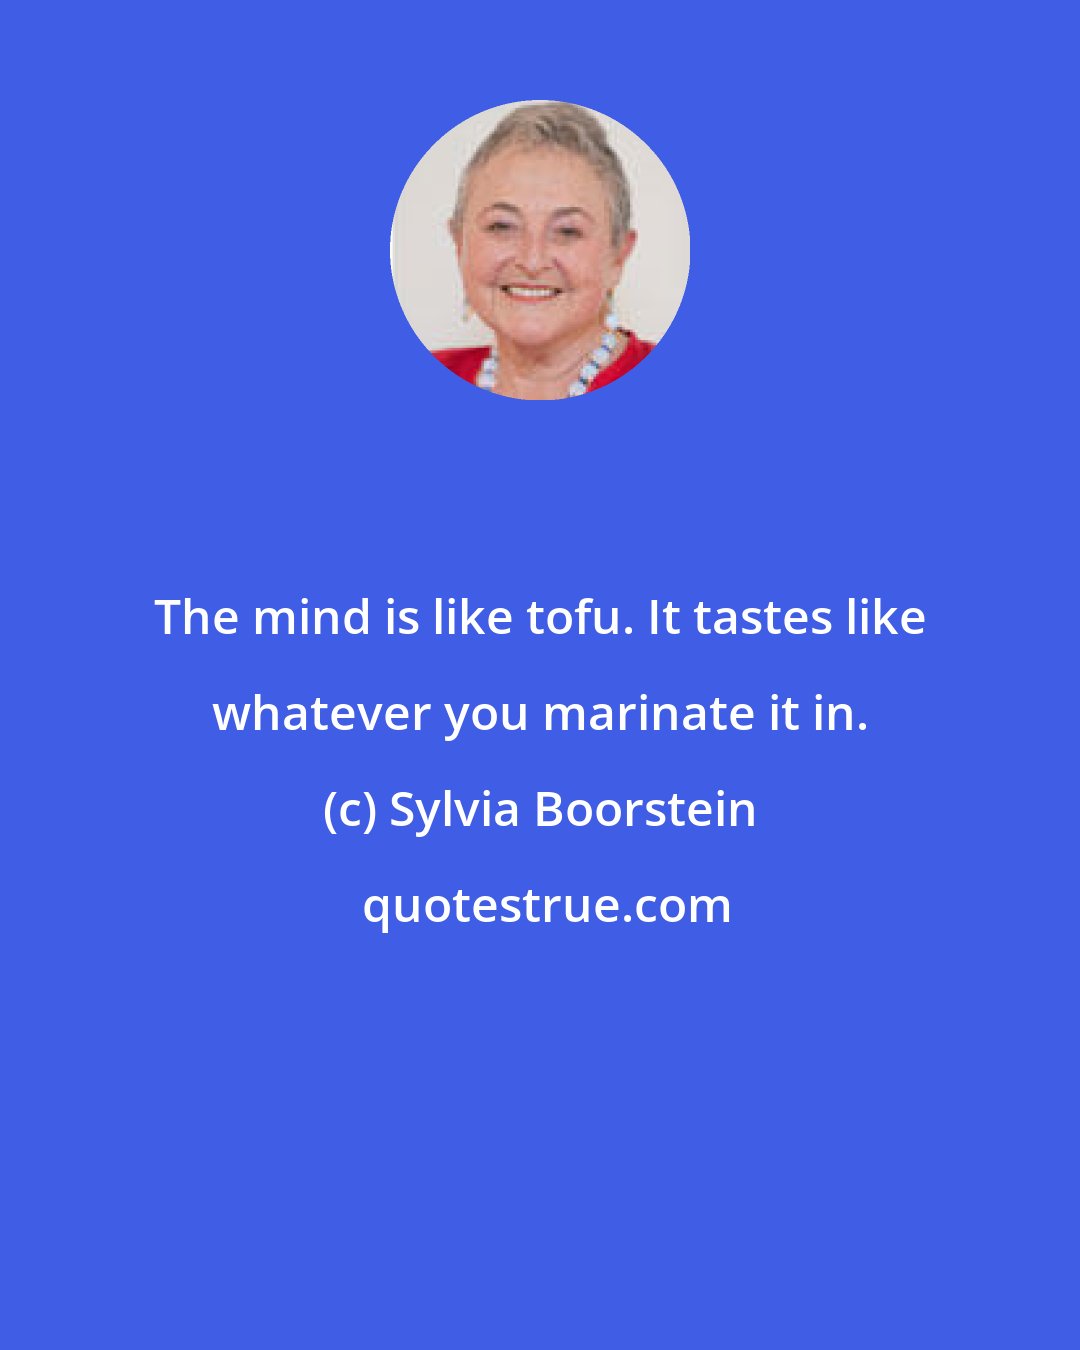 Sylvia Boorstein: The mind is like tofu. It tastes like whatever you marinate it in.